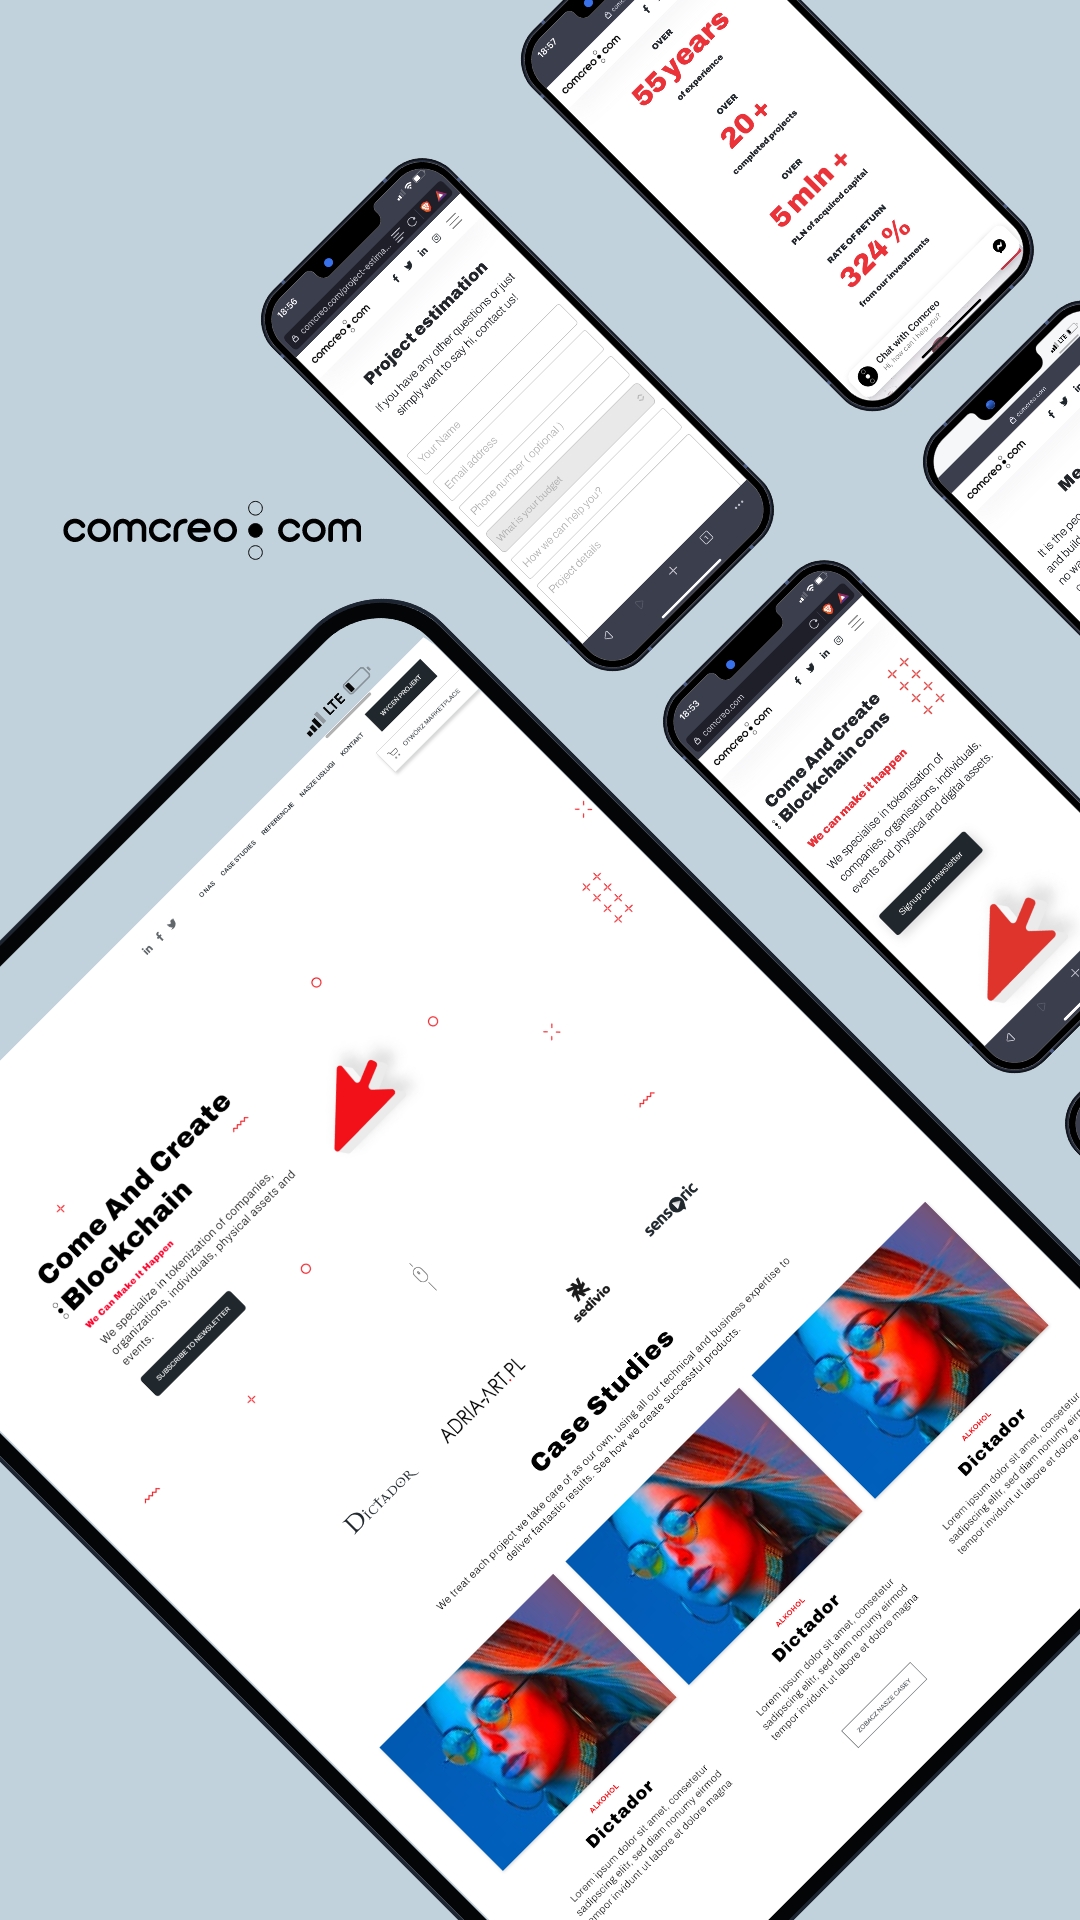 Branding_UX & UI design for comcreo